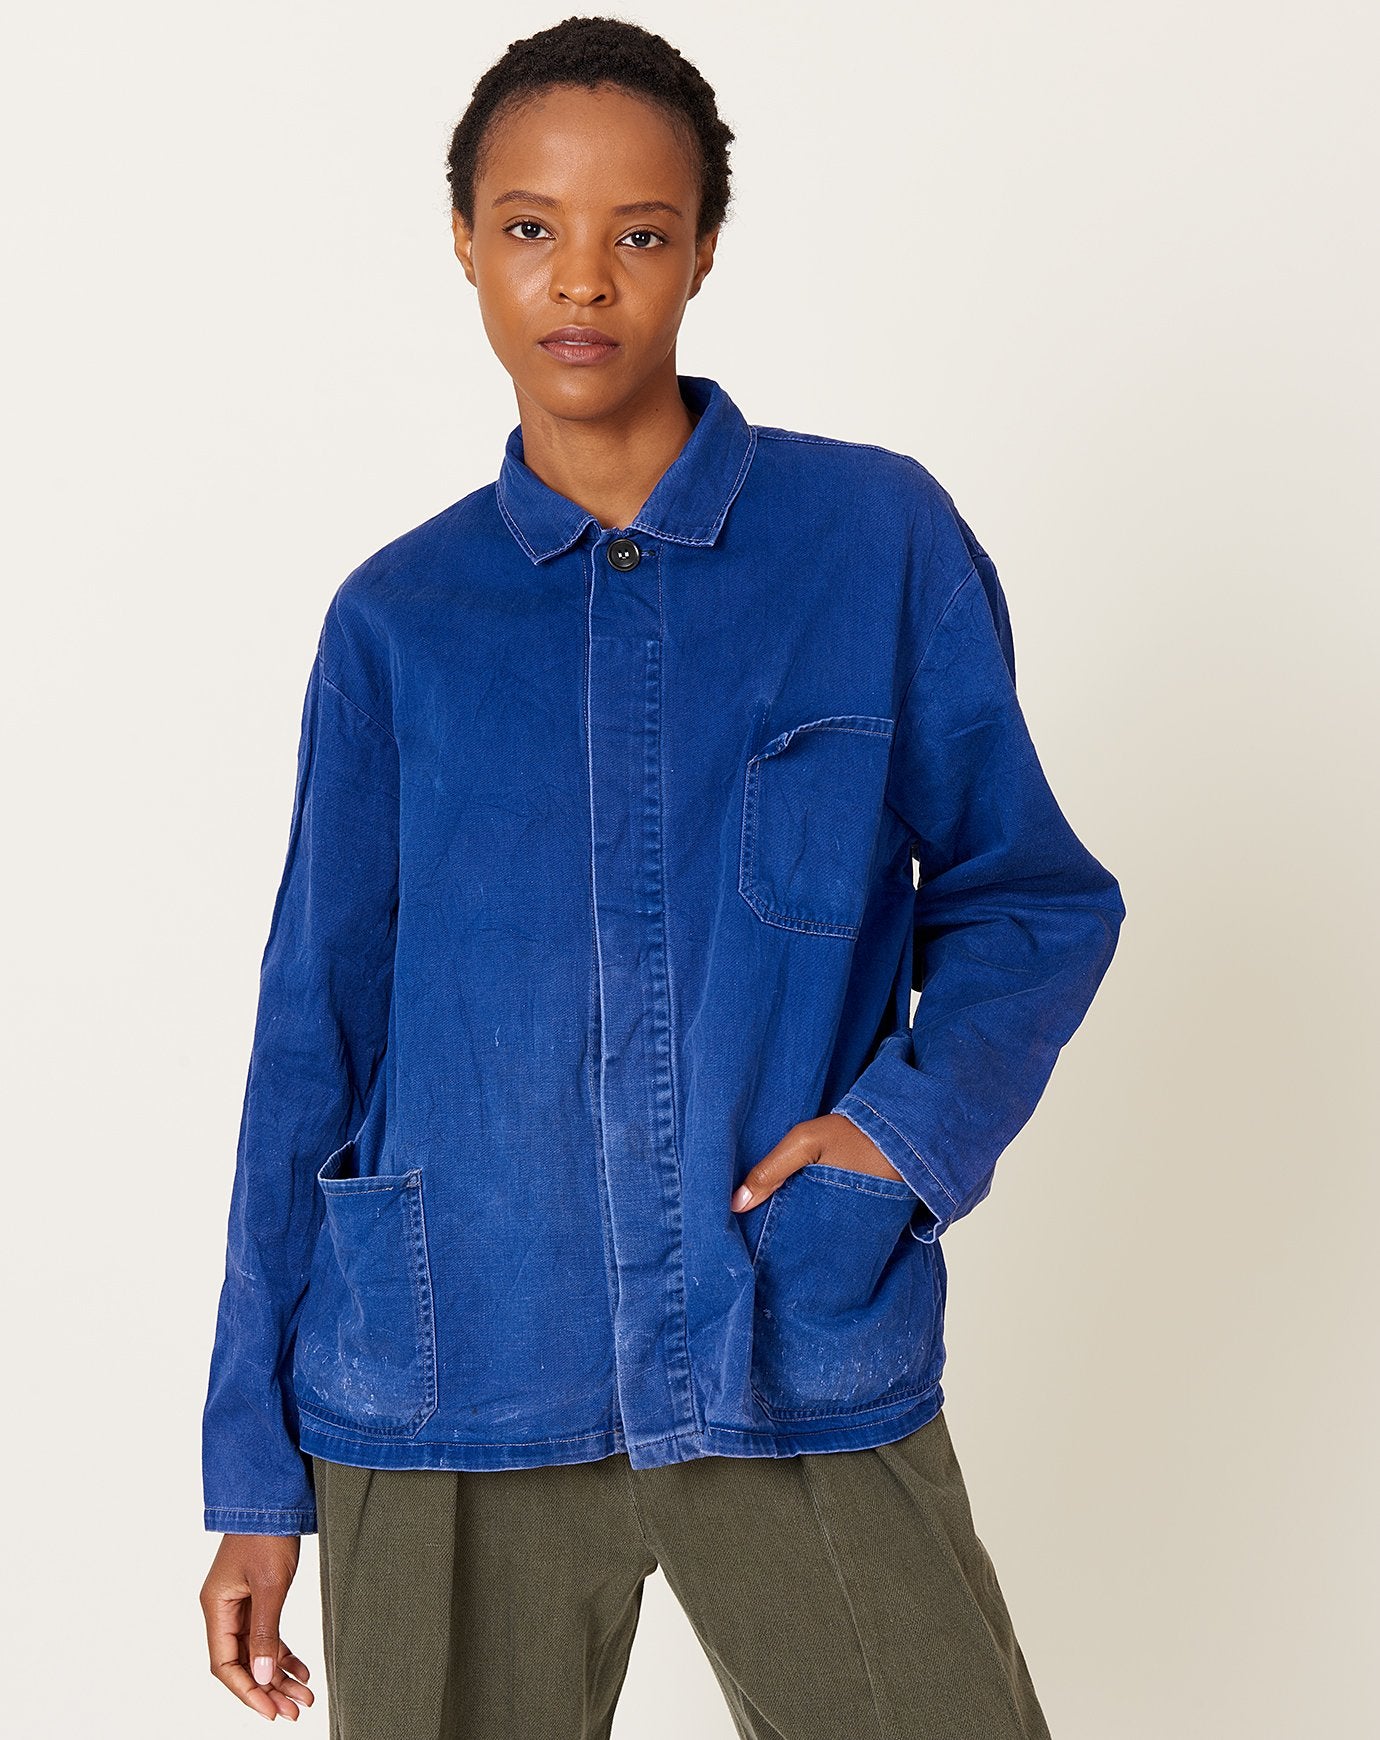 Solid Indigo Textured Chore Jacket